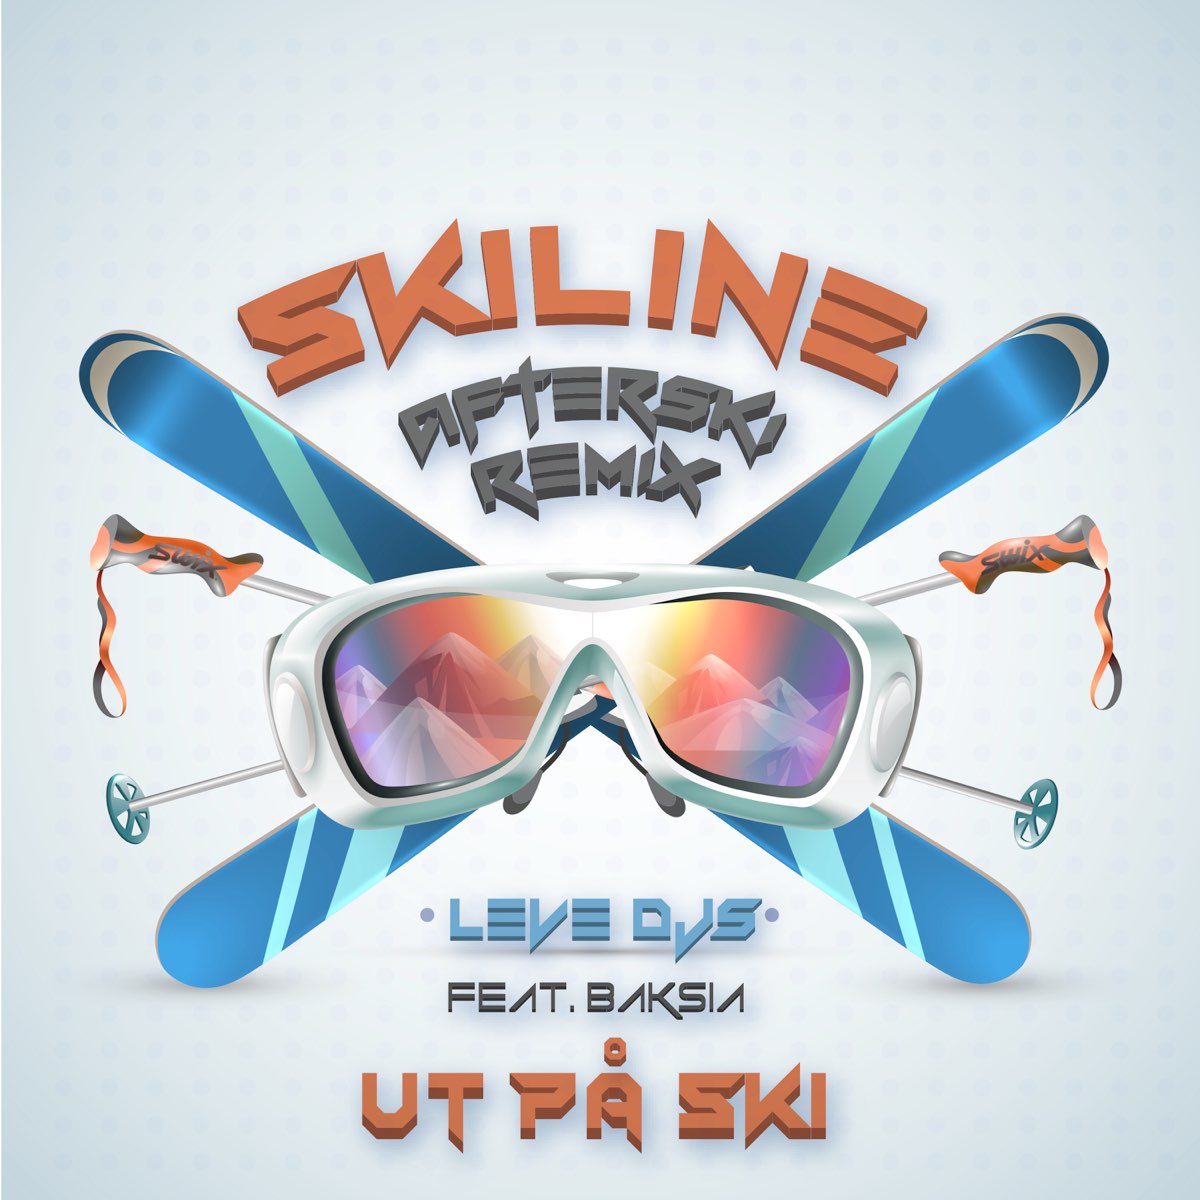 Ut På Ski (Skiline Afterski Remix) [feat. Baksia] - Single by Leve DJs on  Apple Music